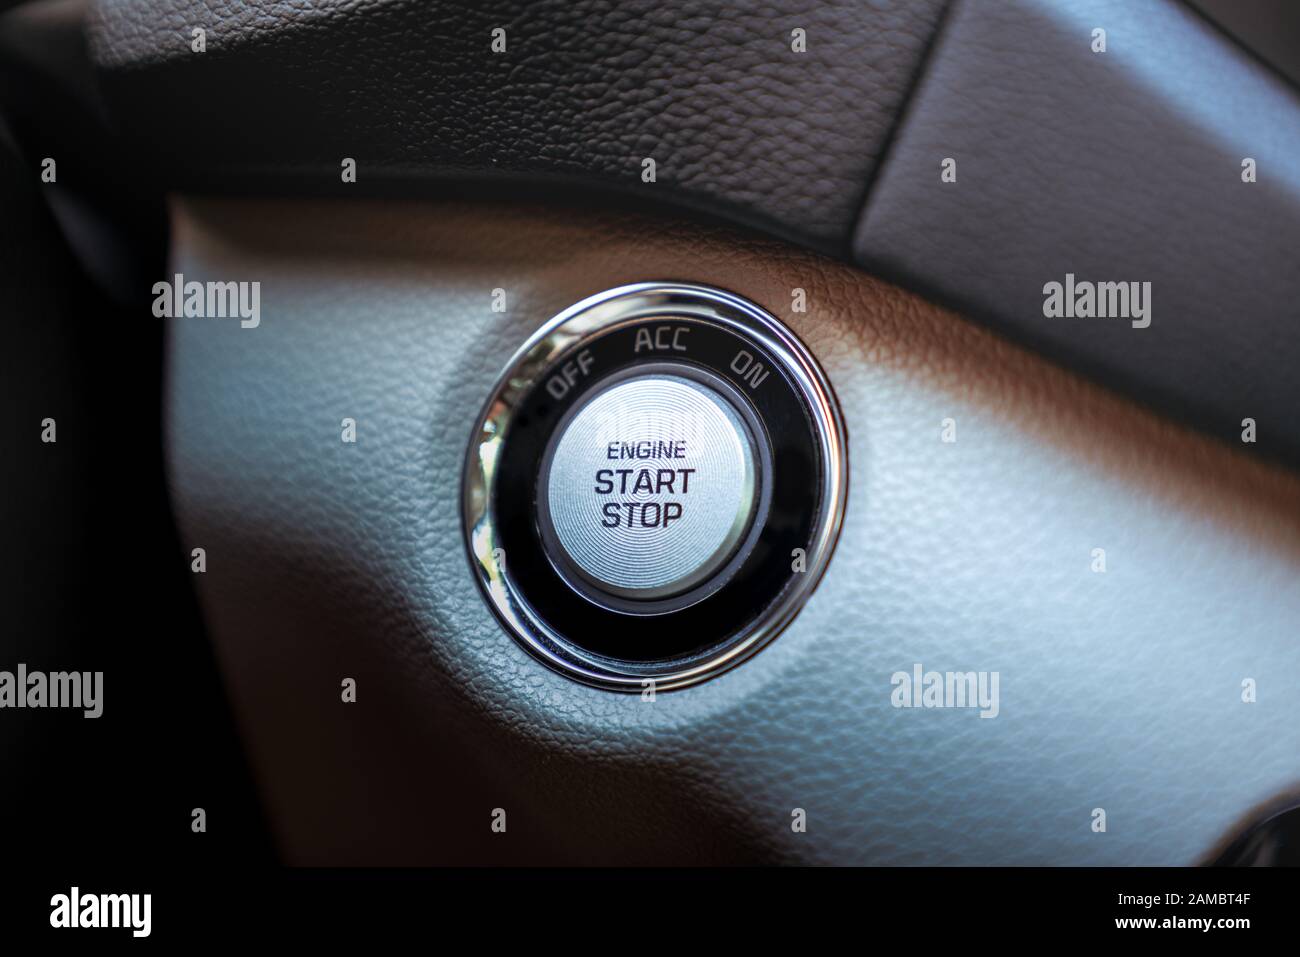 Démarrer arrêter le moteur nouvelle technologie moderne bouton voiture, gros plan Banque D'Images